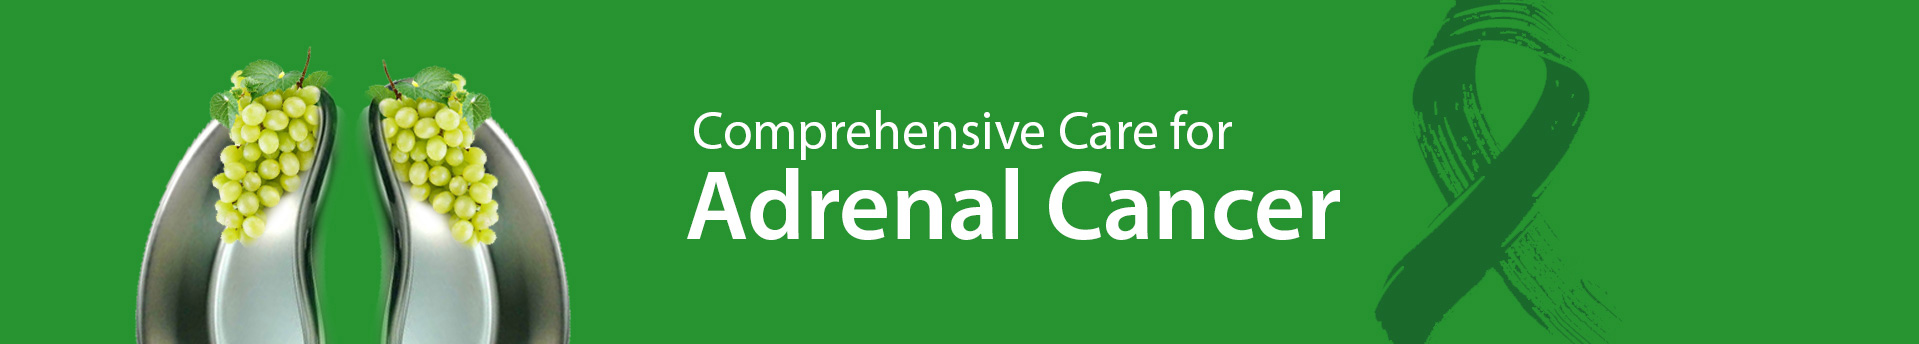 Medicaoncology adrenal Cancer